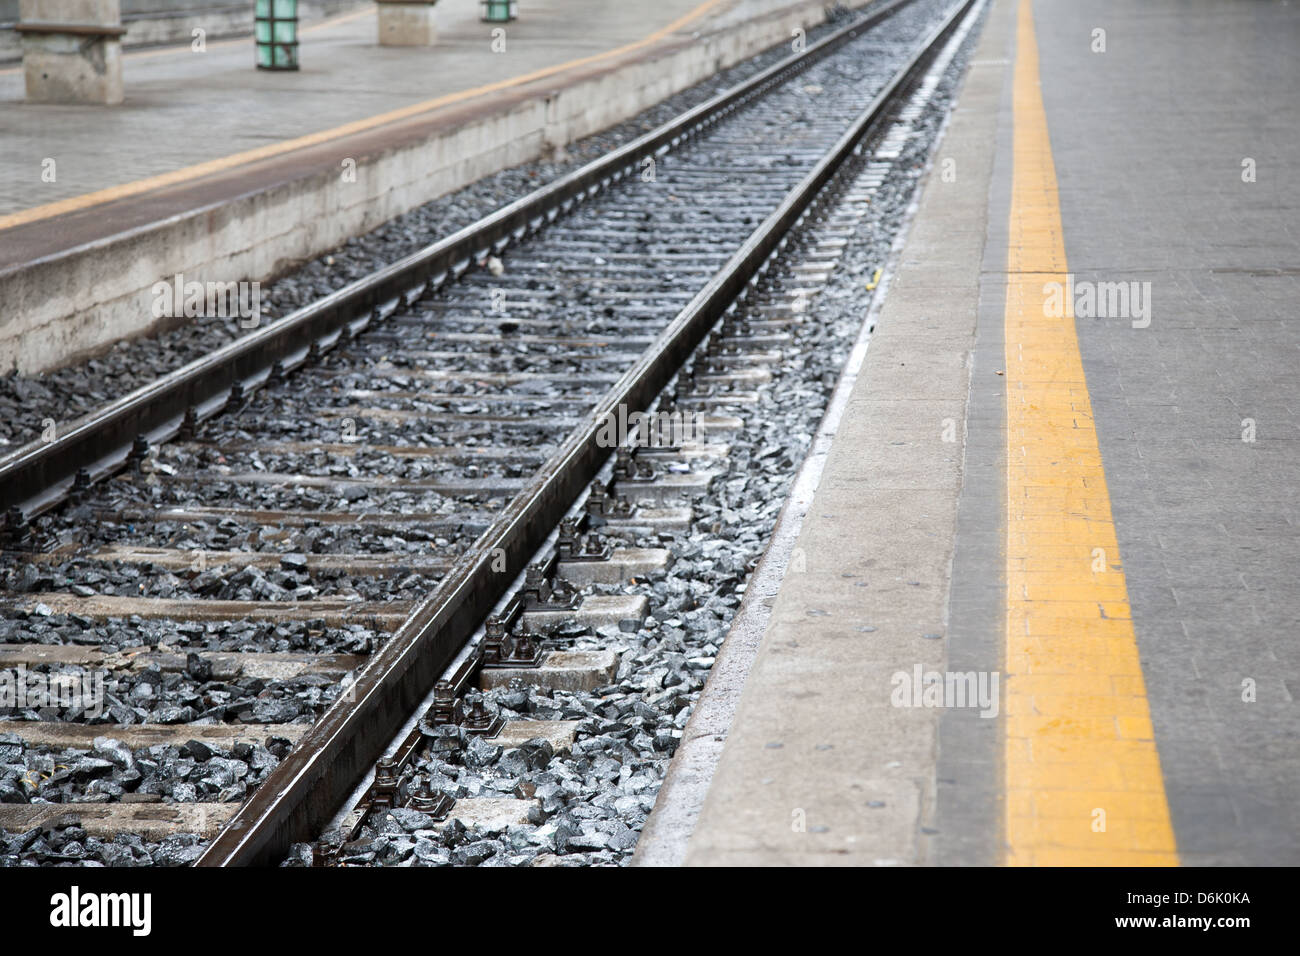 Wet Railway Tracks and Platform with Yellow Line Stock Photo